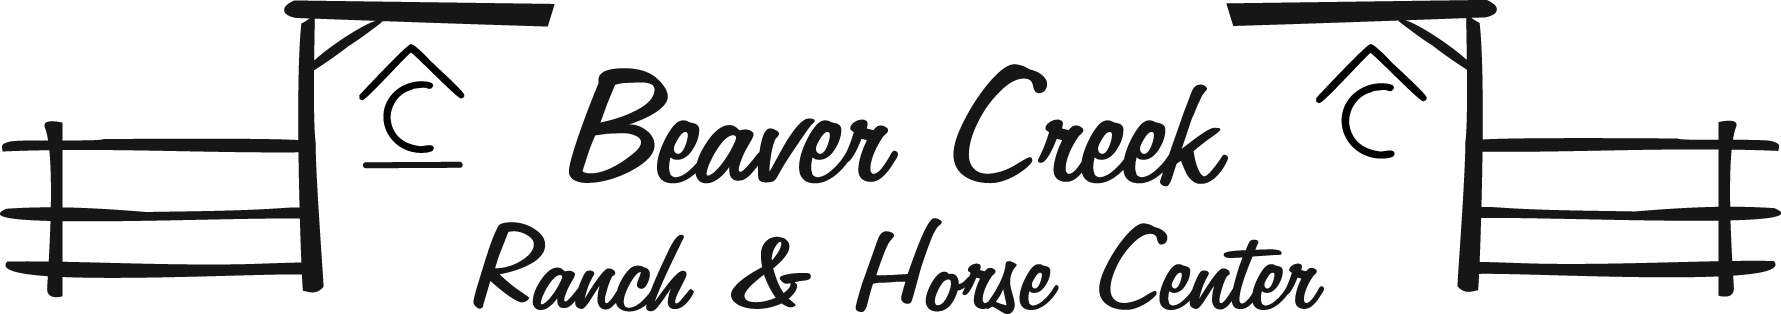 Beaver Creek Ranch - Lumsden - Logo